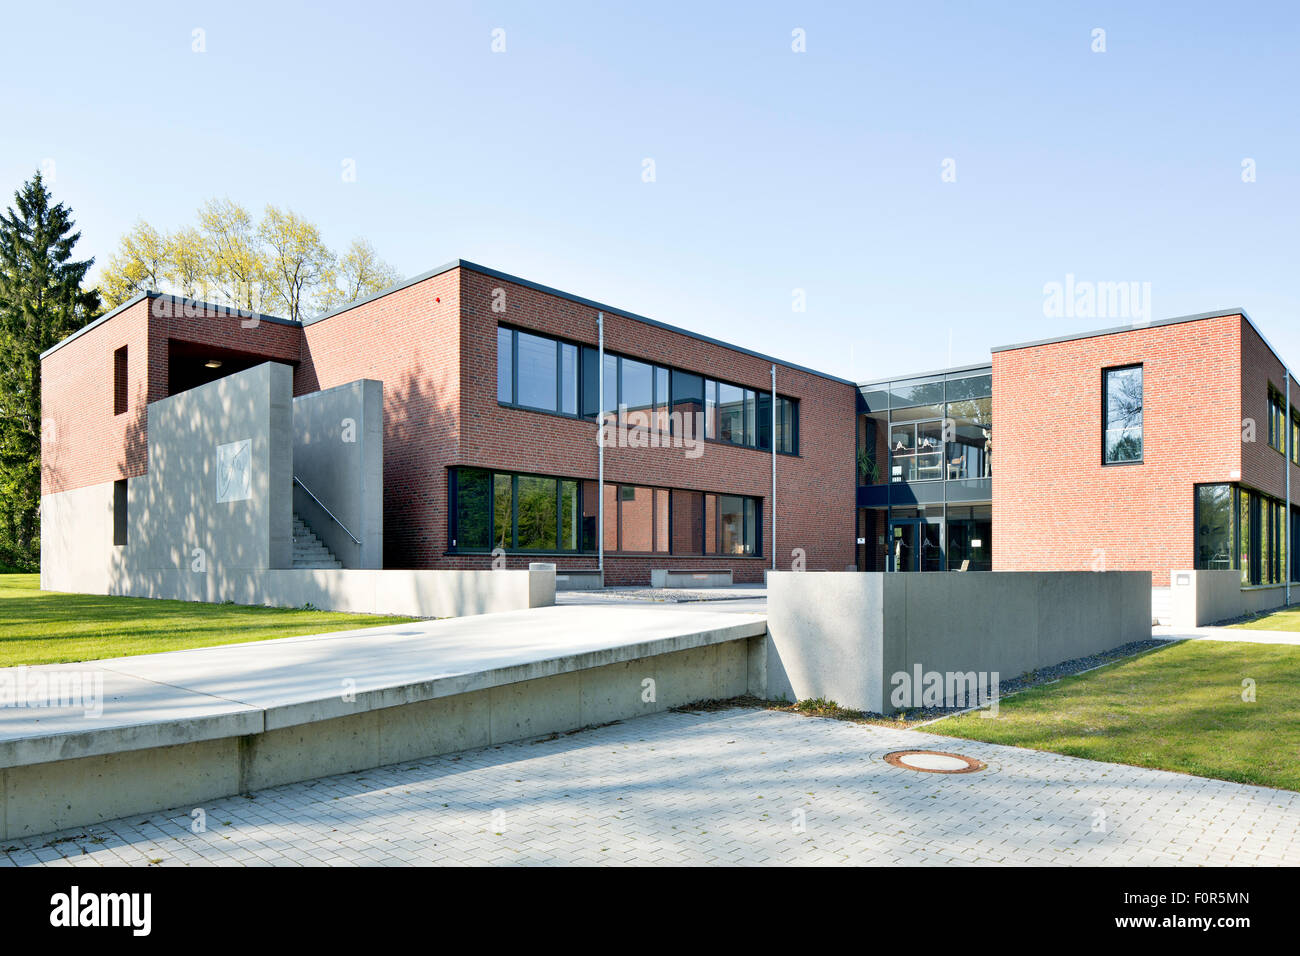 Hamm-Heessen Landschulheim, bâtiments scolaires, l'expansion, Hamm, Westphalie, Rhénanie-Palatinat, Allemagne Banque D'Images